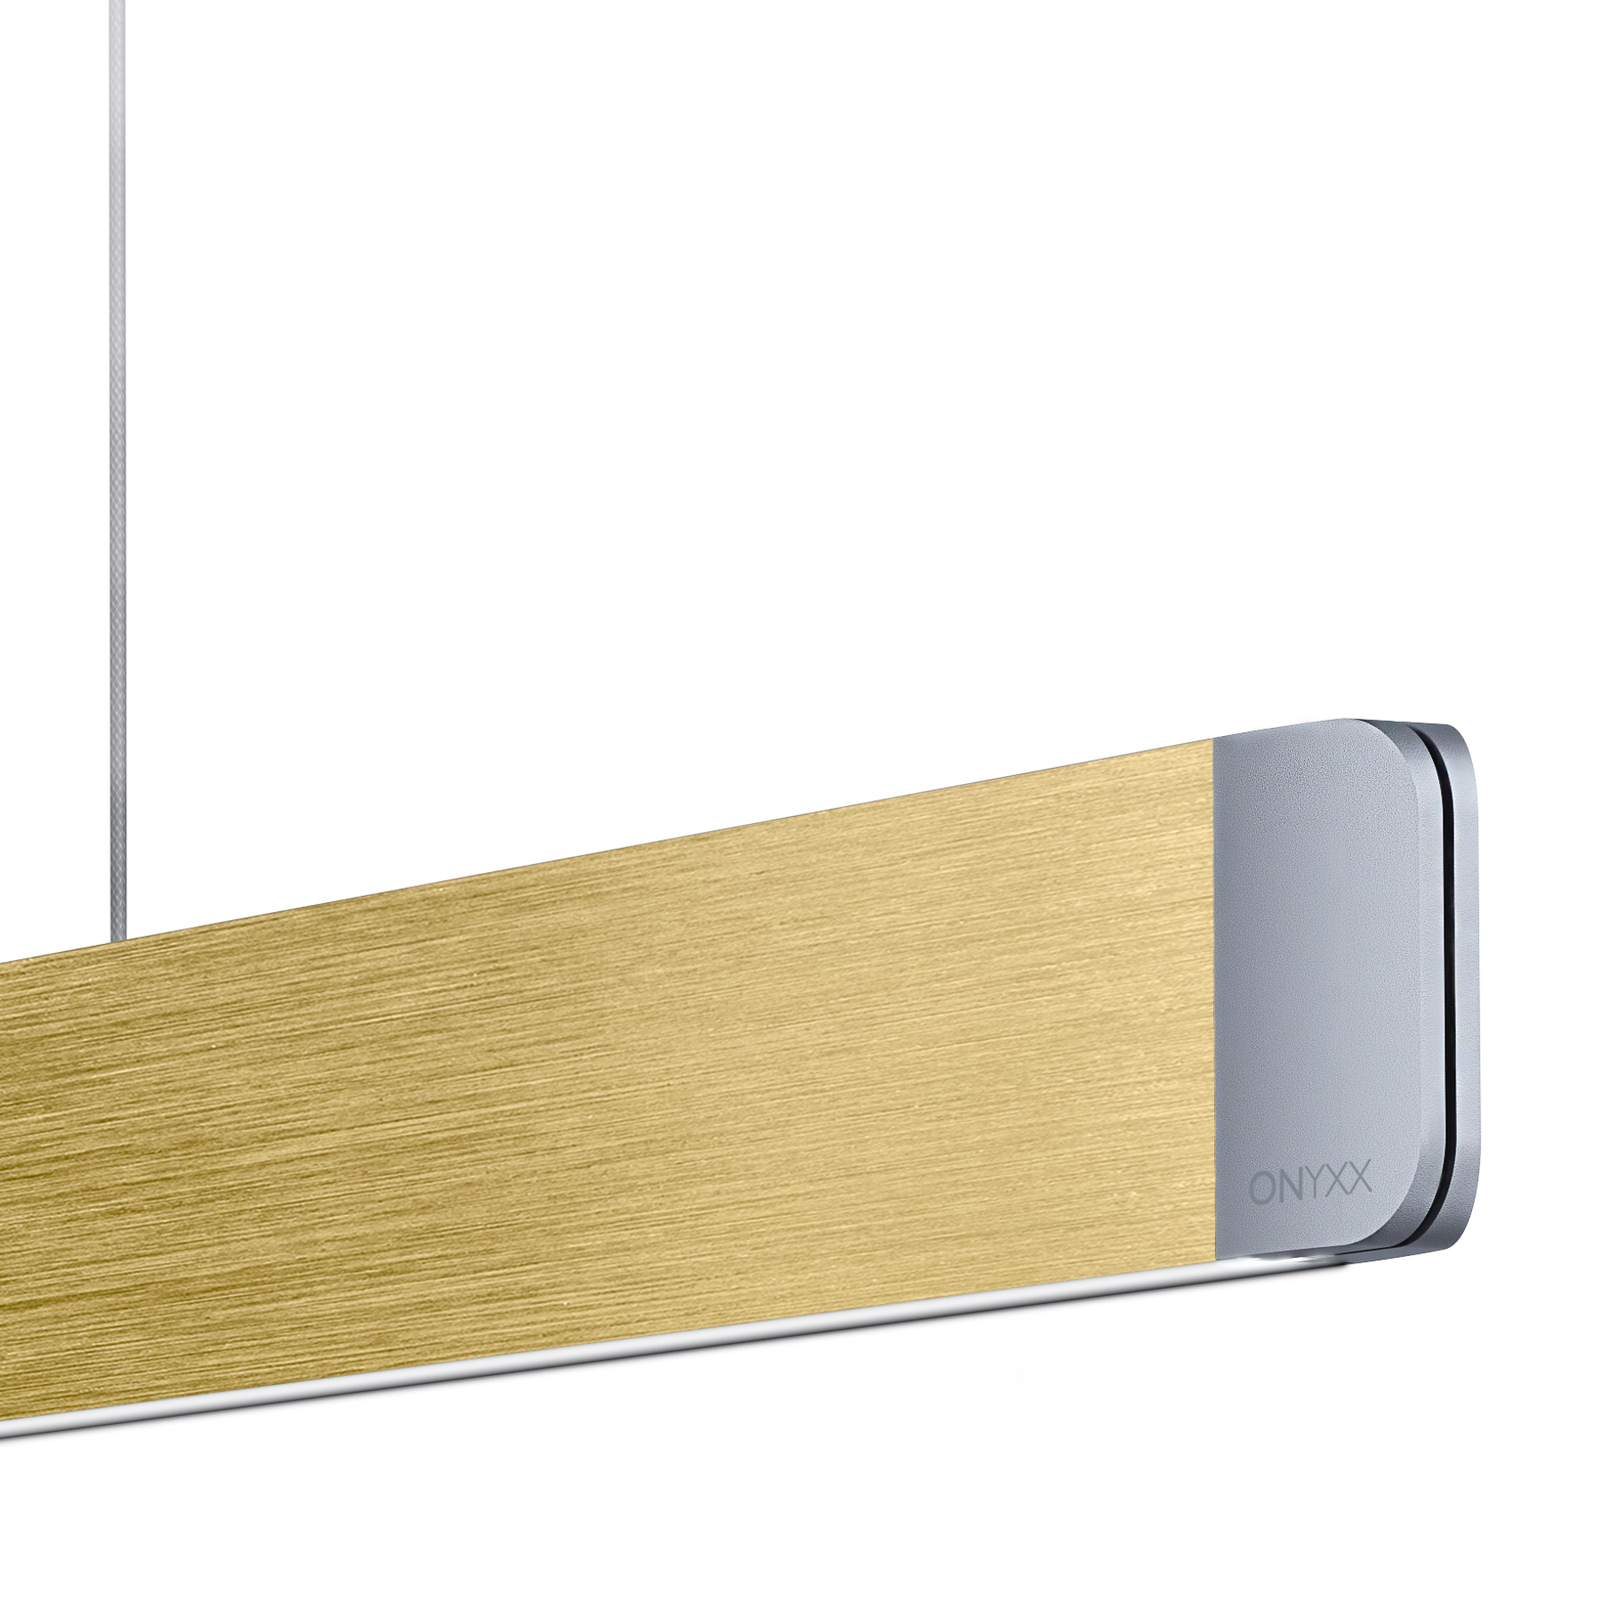 GRIMMEISEN Onyxx Linea Pro hanglamp goud/zilver